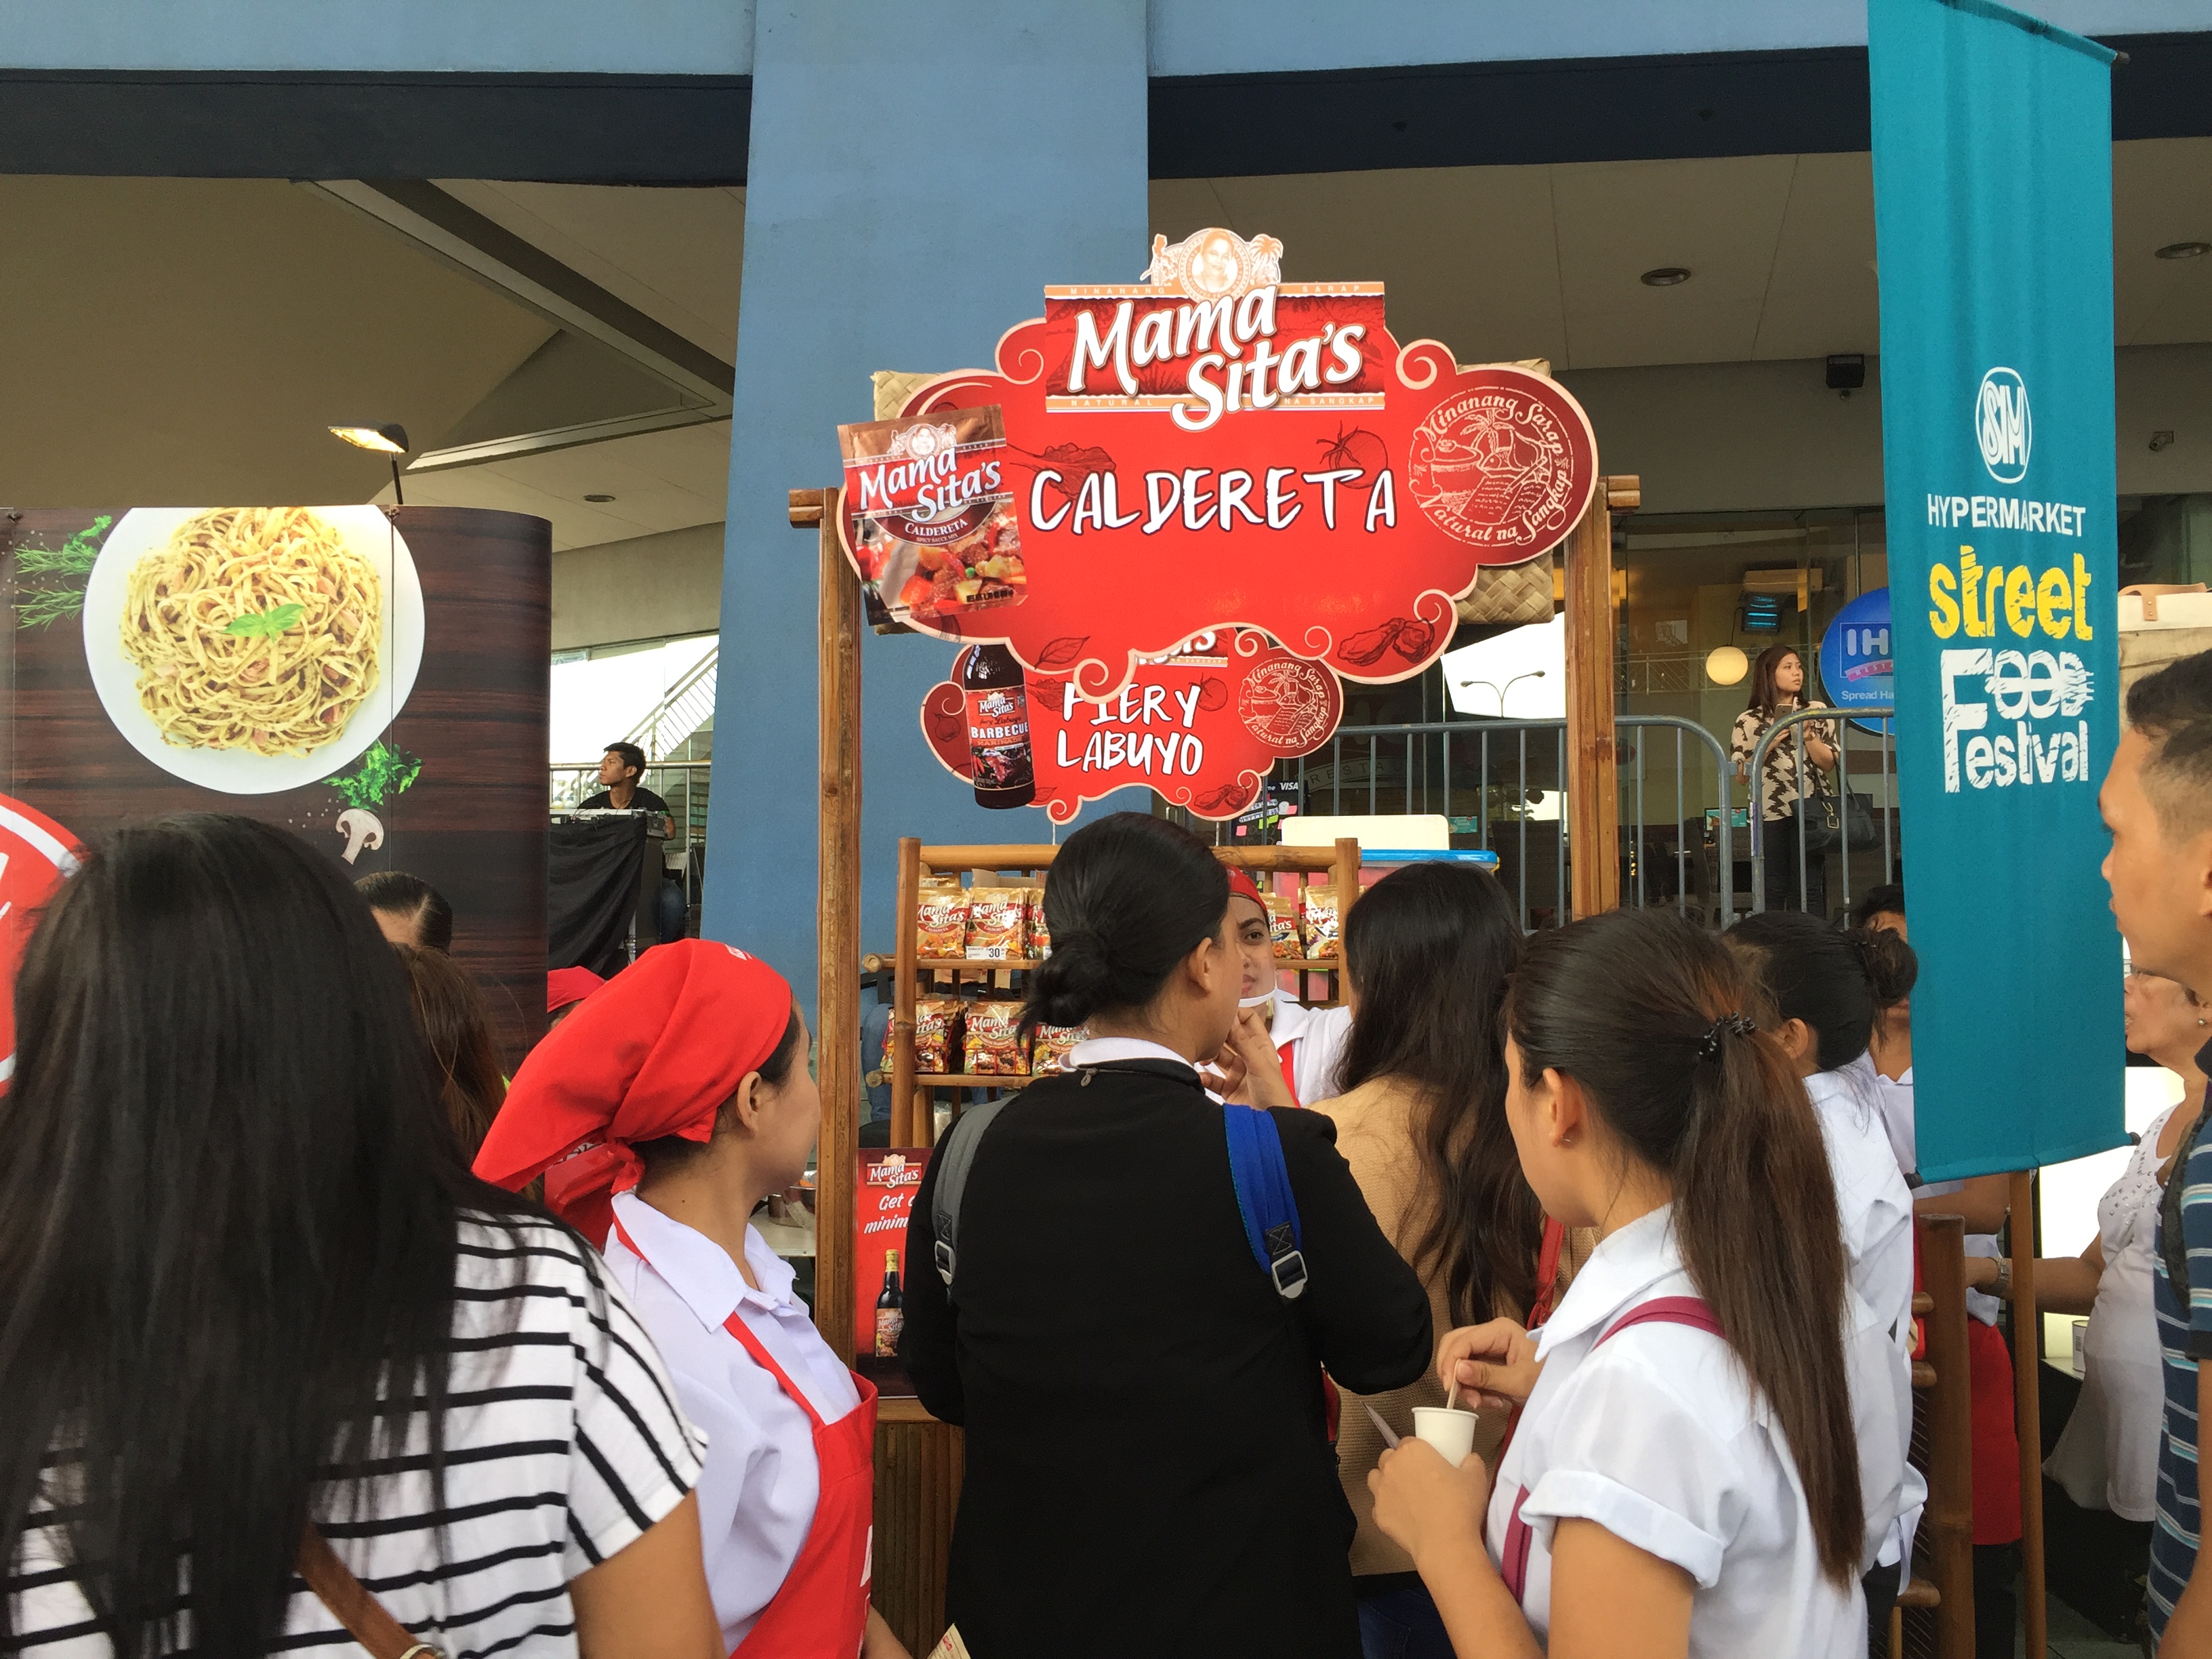 empoy marquez at sm hypermarket street food festival 2017